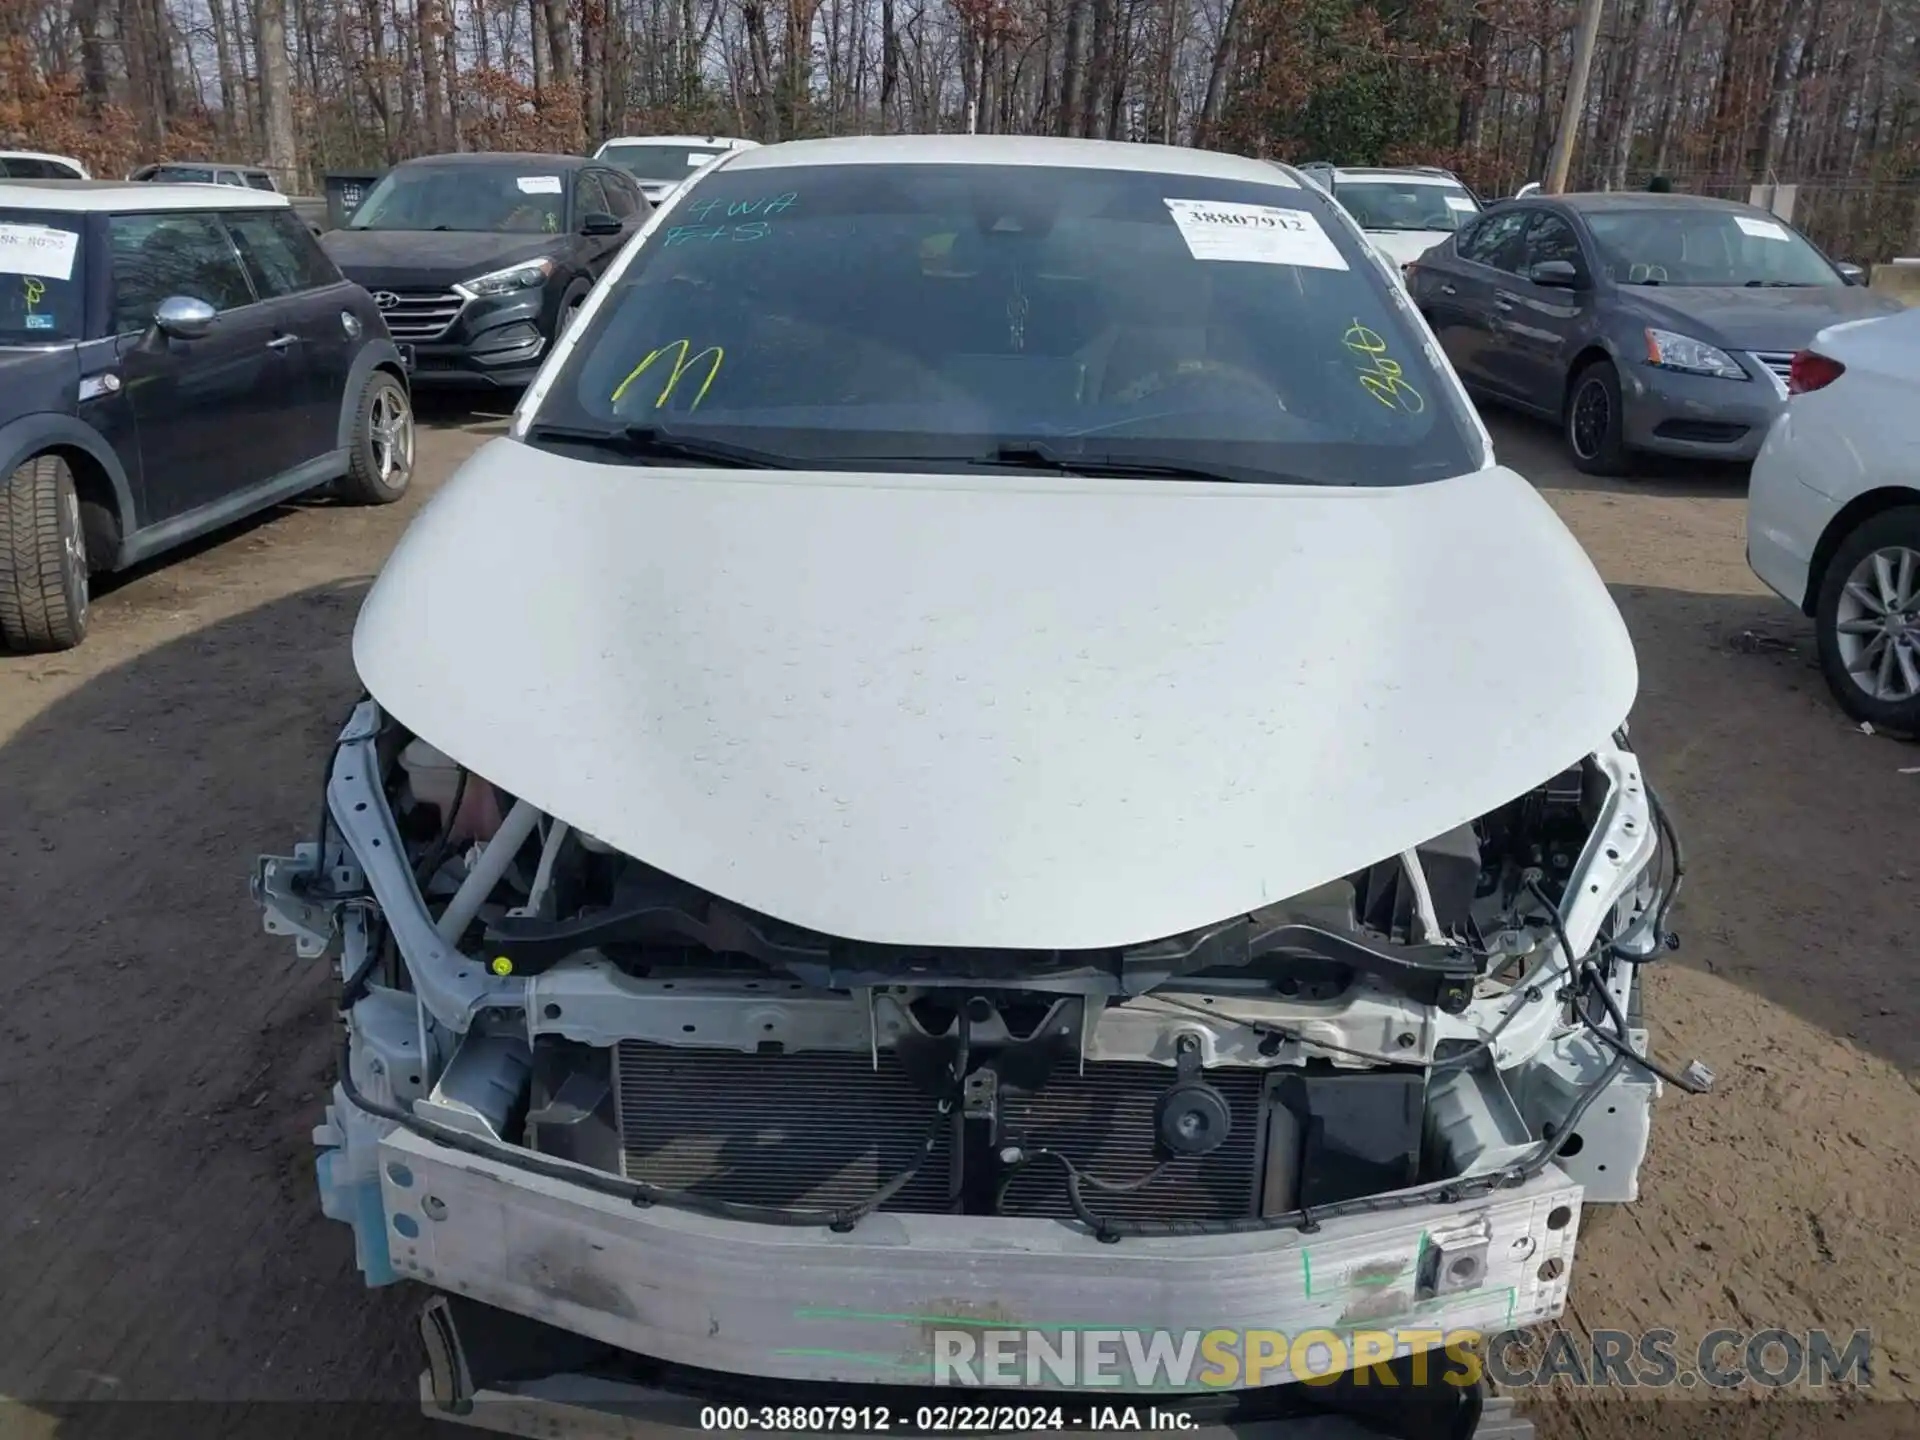 13 Photograph of a damaged car NMTKHMBX2LR106713 TOYOTA C-HR 2020